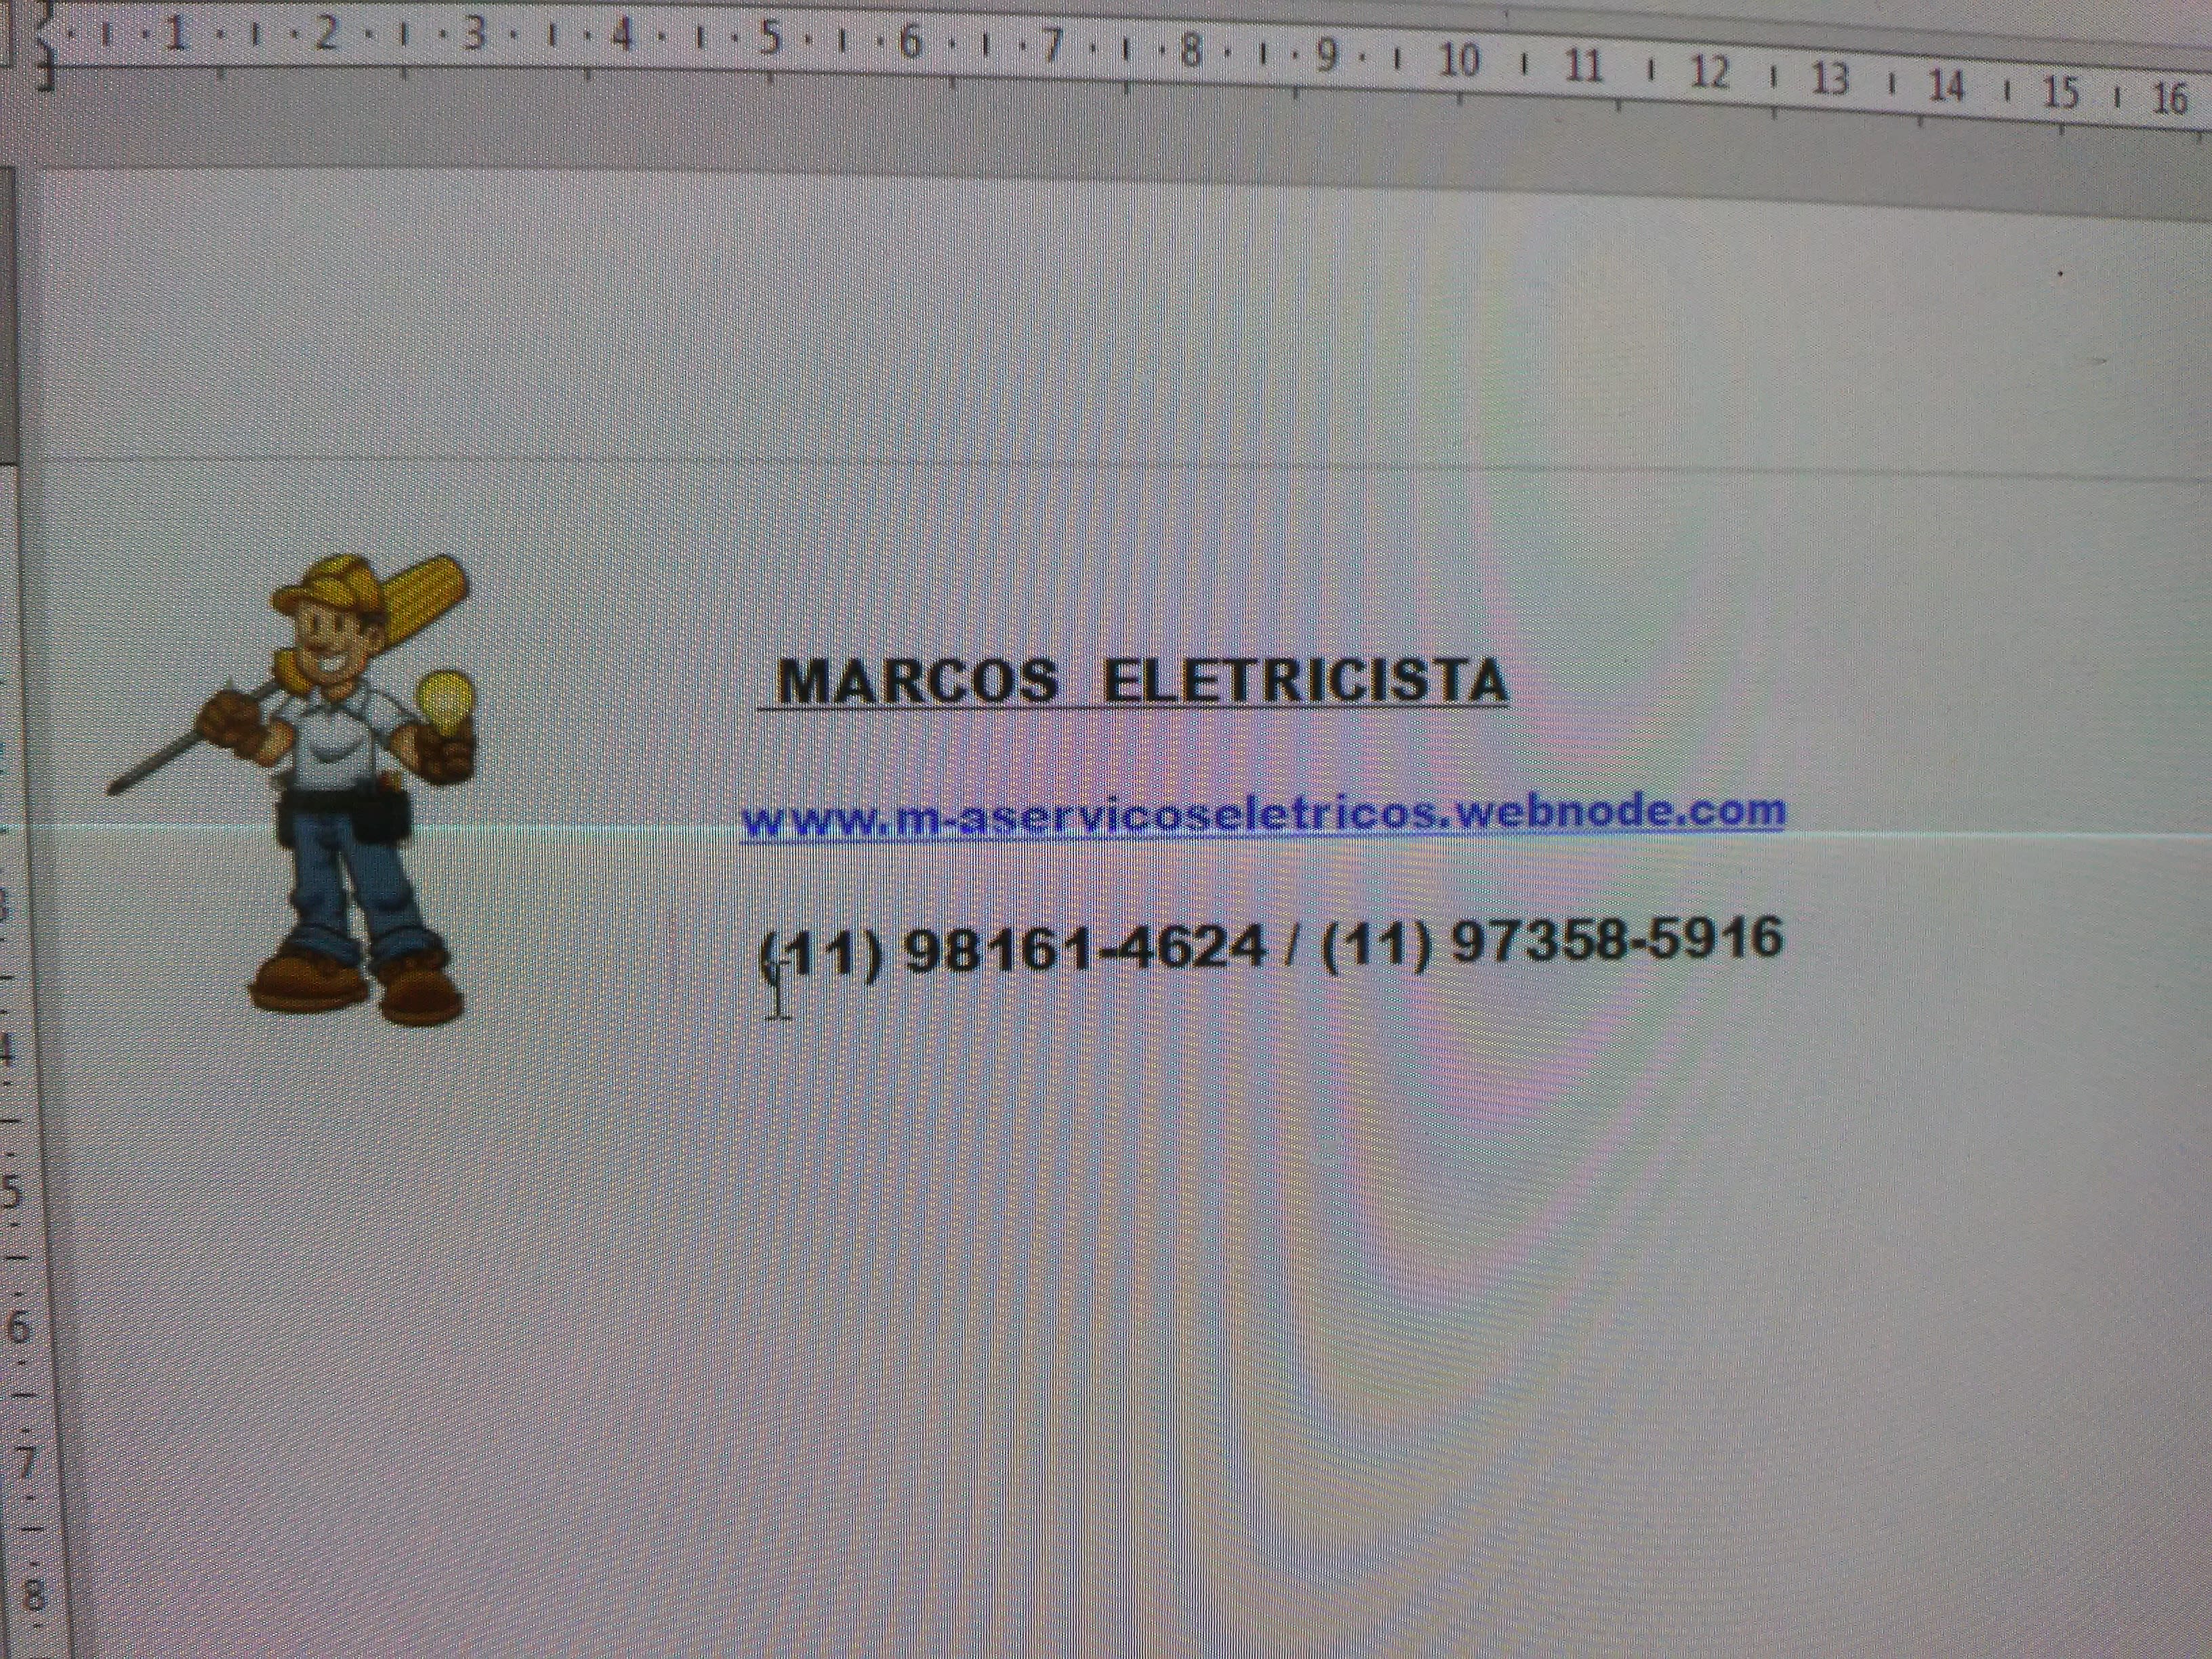 Marcos Eletricista